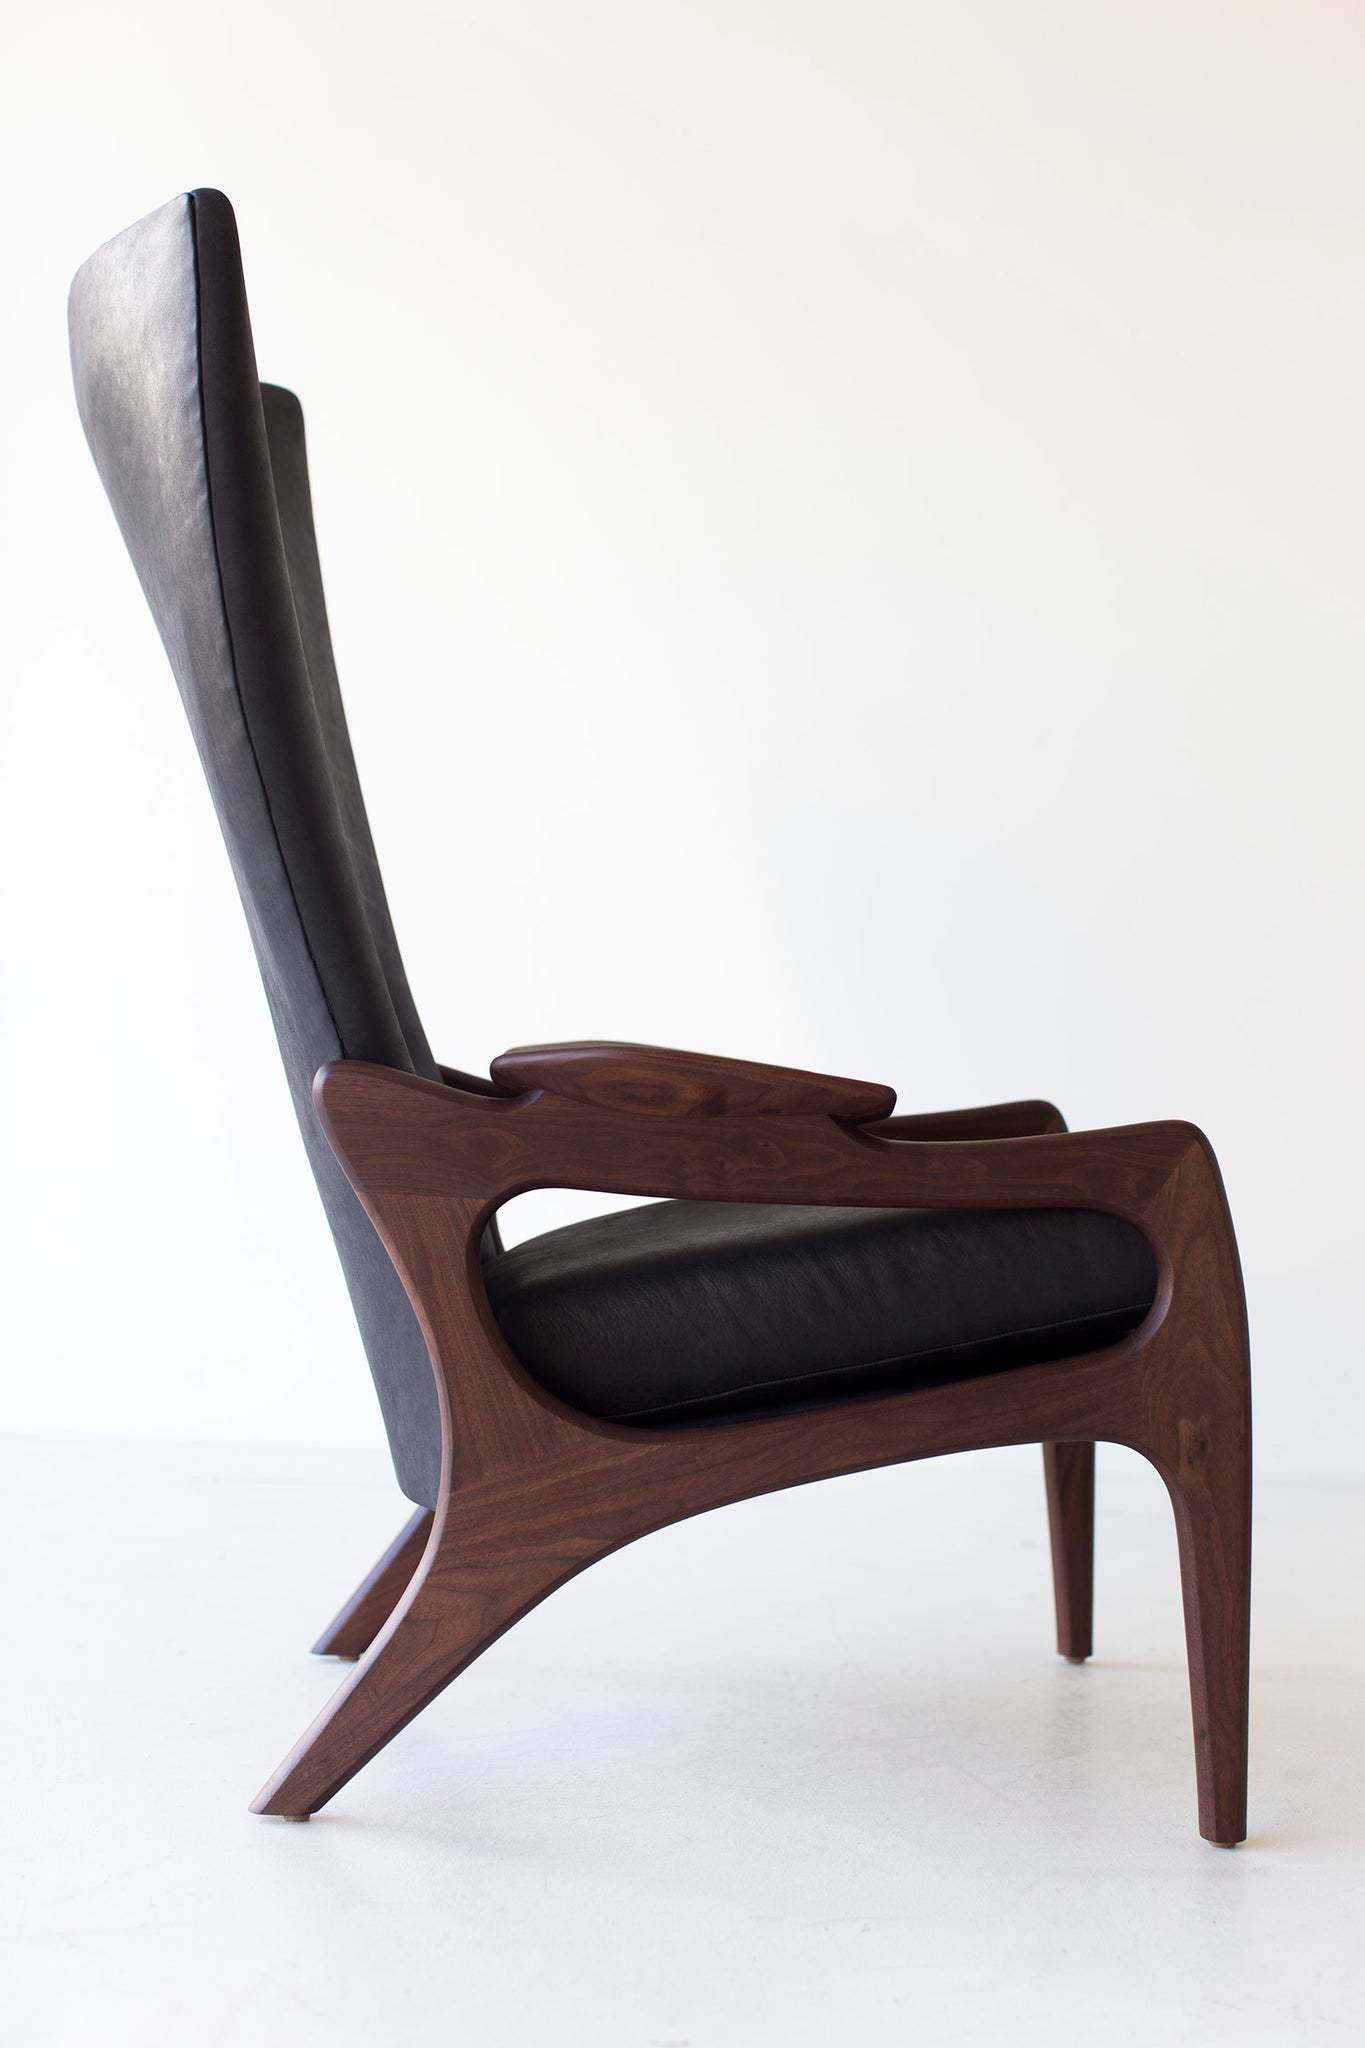 hillsdale-modern-leather-high-back-chair-1604-05